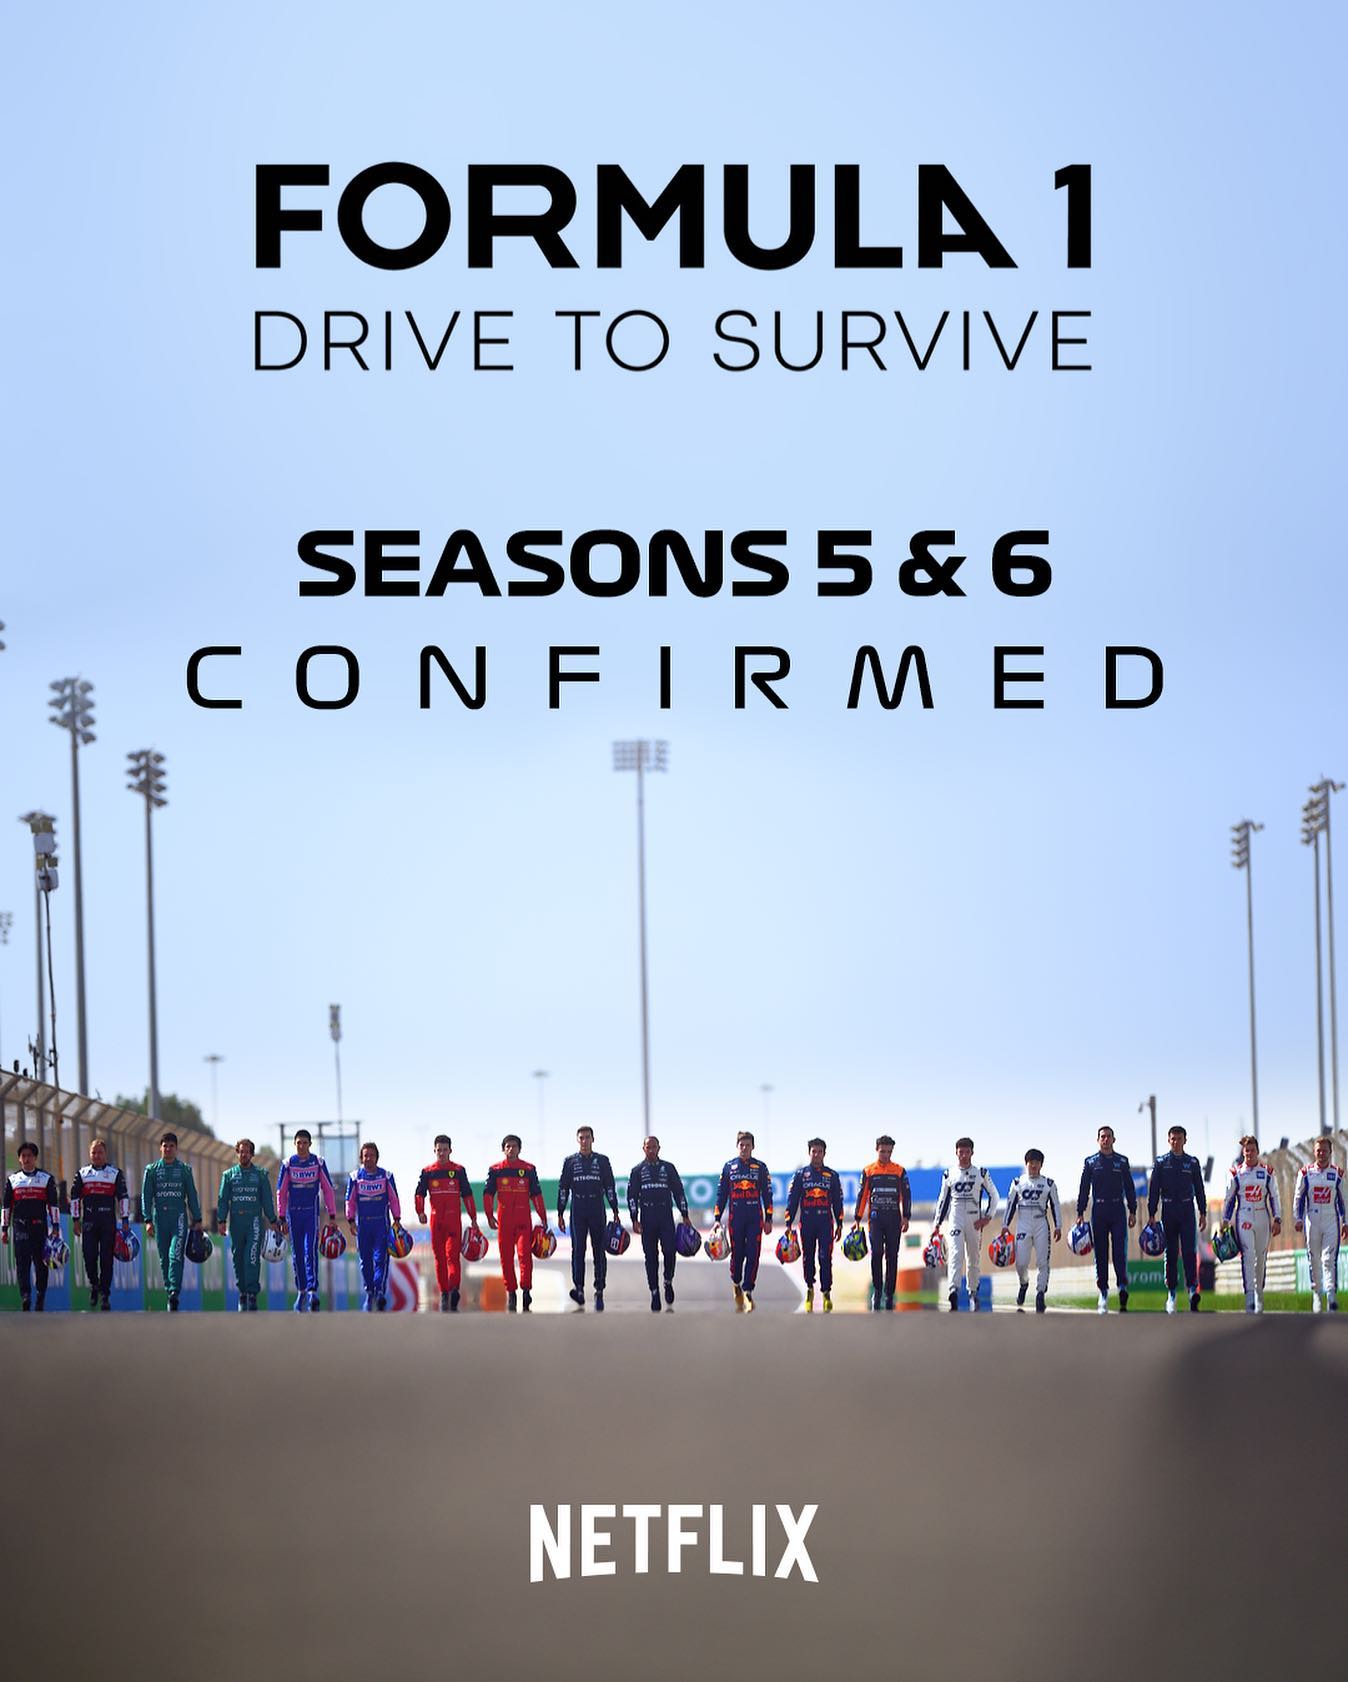 formula 1 drive to survive netflix season 5 6